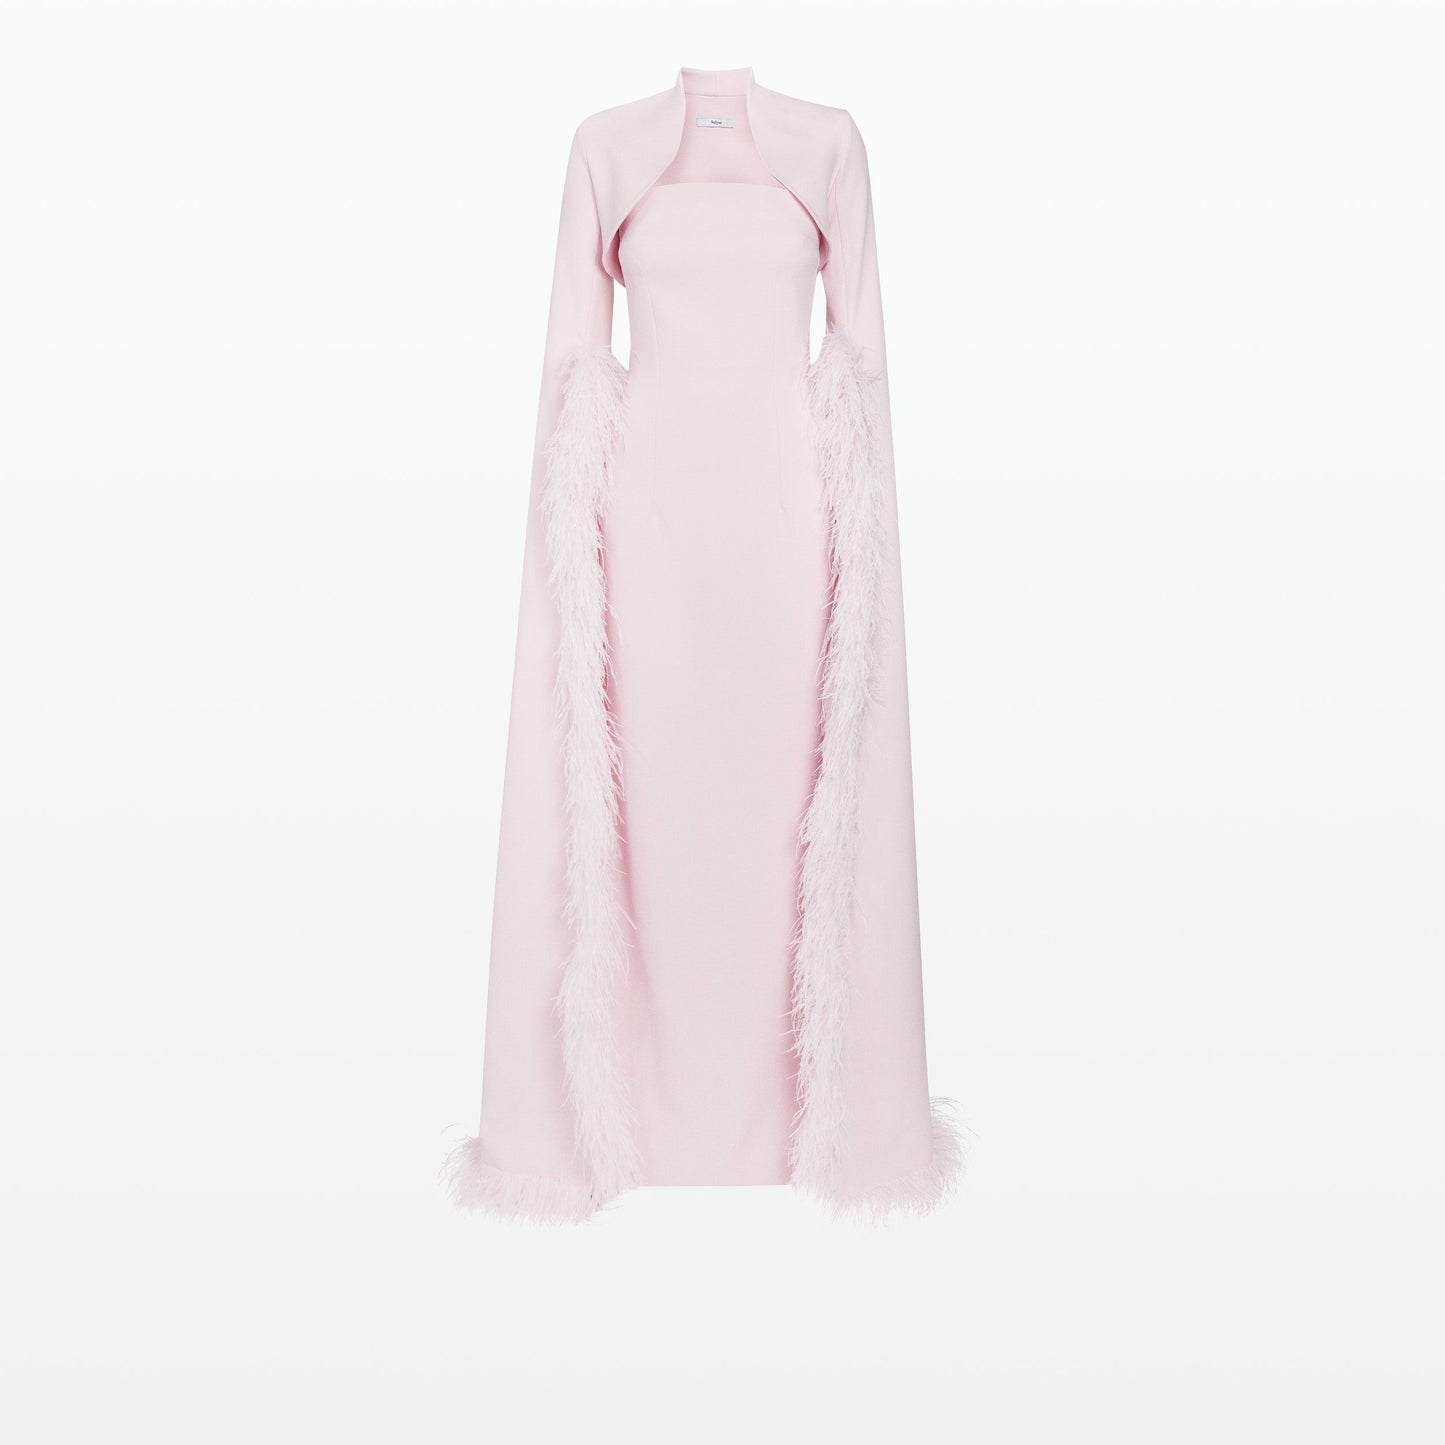 Amari Pale Pink Feather-Trimmed Bolero With Soshin Dress